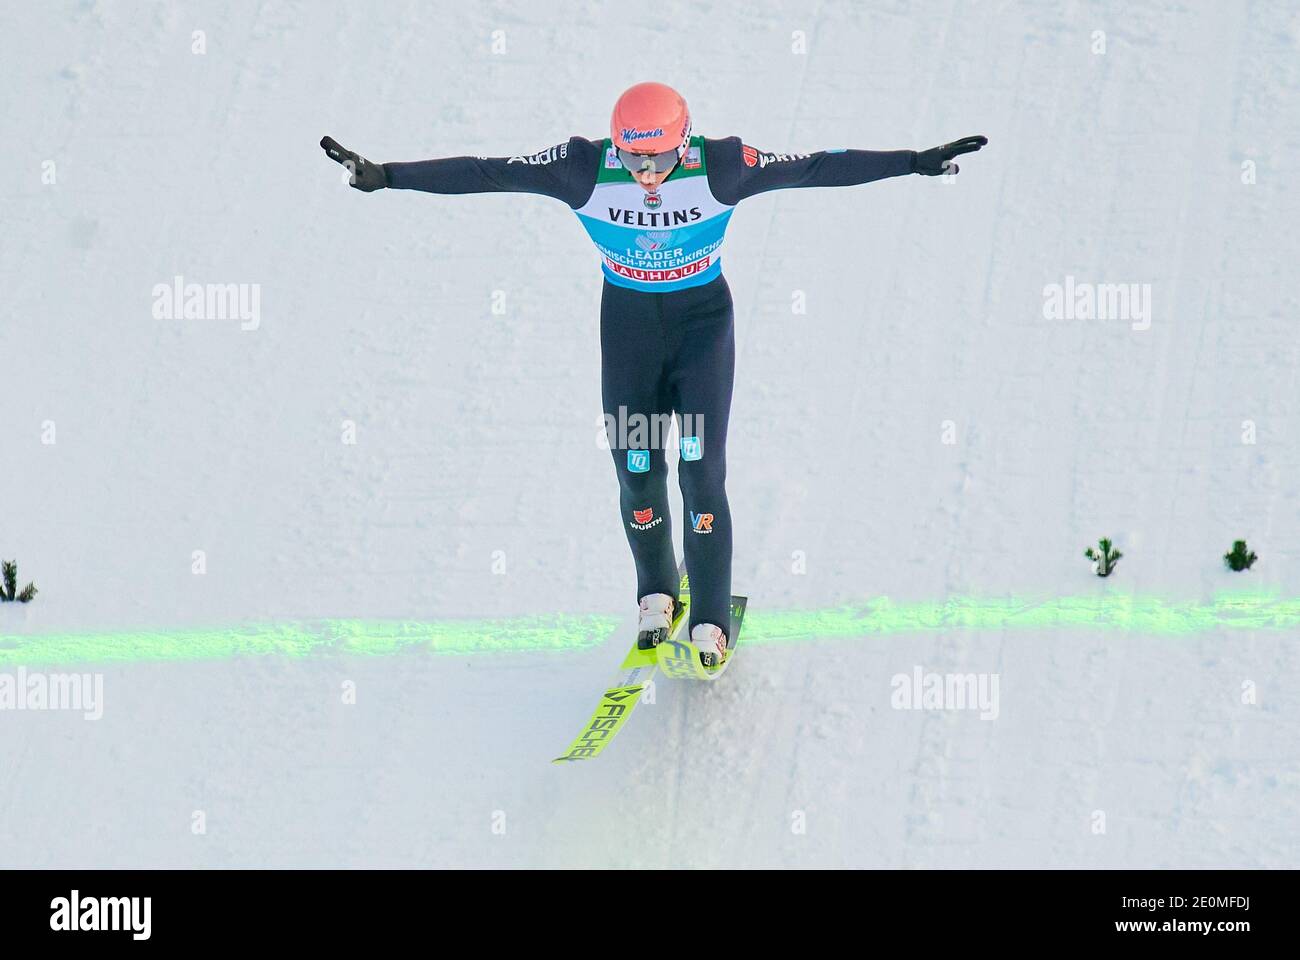 Karl GEIGER, GER  in action landung at the Four Hills Tournament Ski Jumping at Olympic Stadium, Grosse Olympiaschanze in Garmisch-Partenkirchen, Bavaria, Germany, January 01, 2021.  © Peter Schatz / Alamy Live News Stock Photo